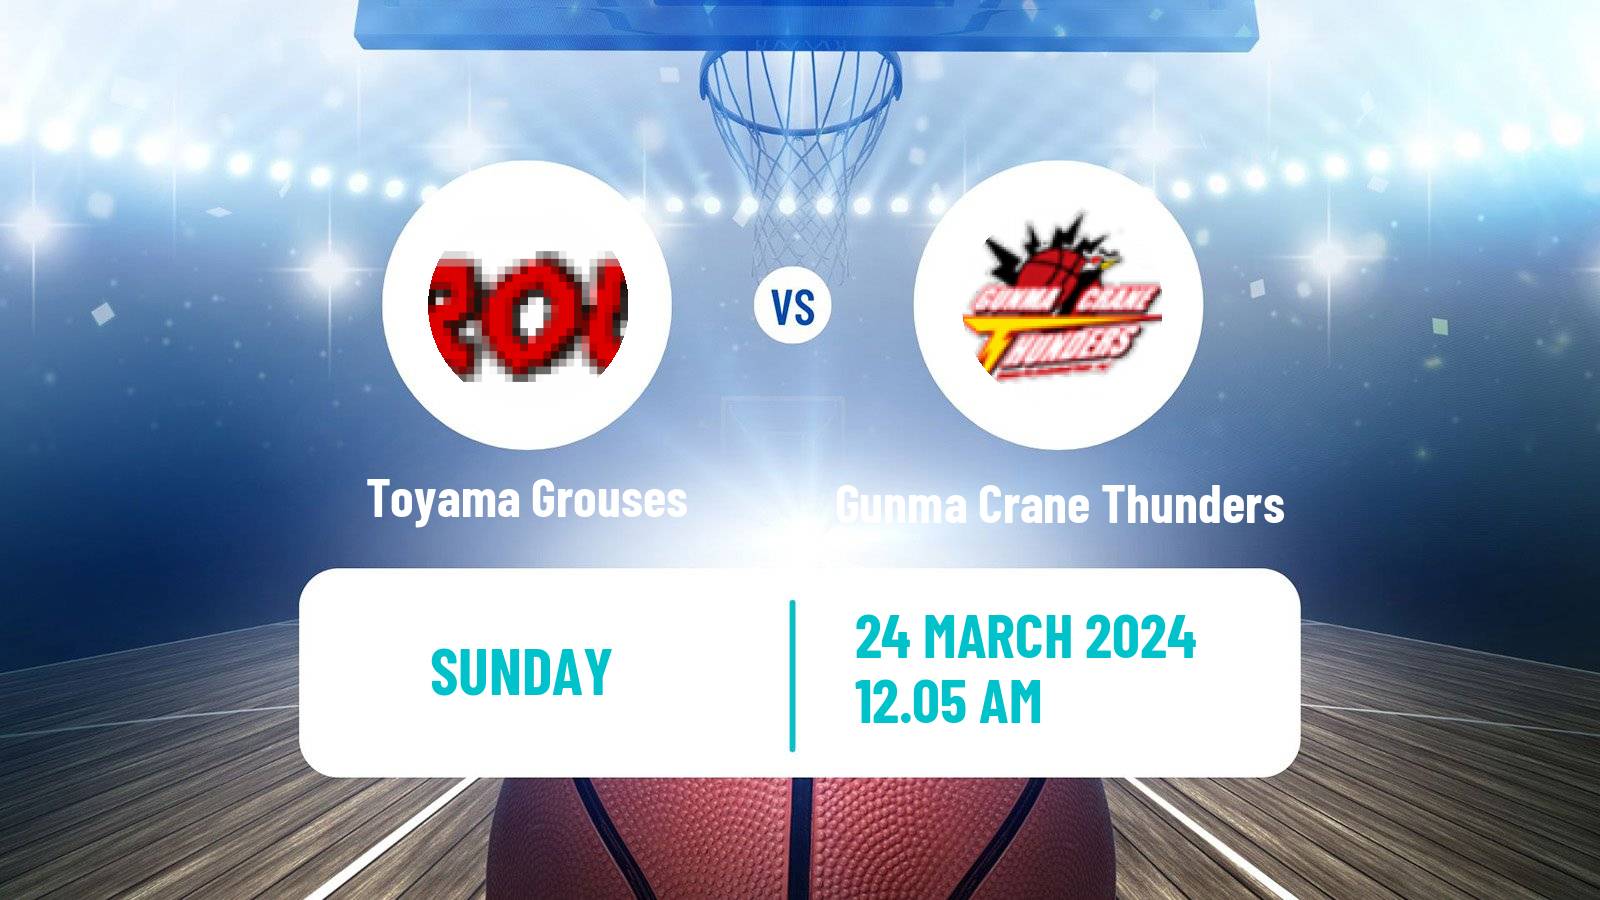 Basketball BJ League Toyama Grouses - Gunma Crane Thunders